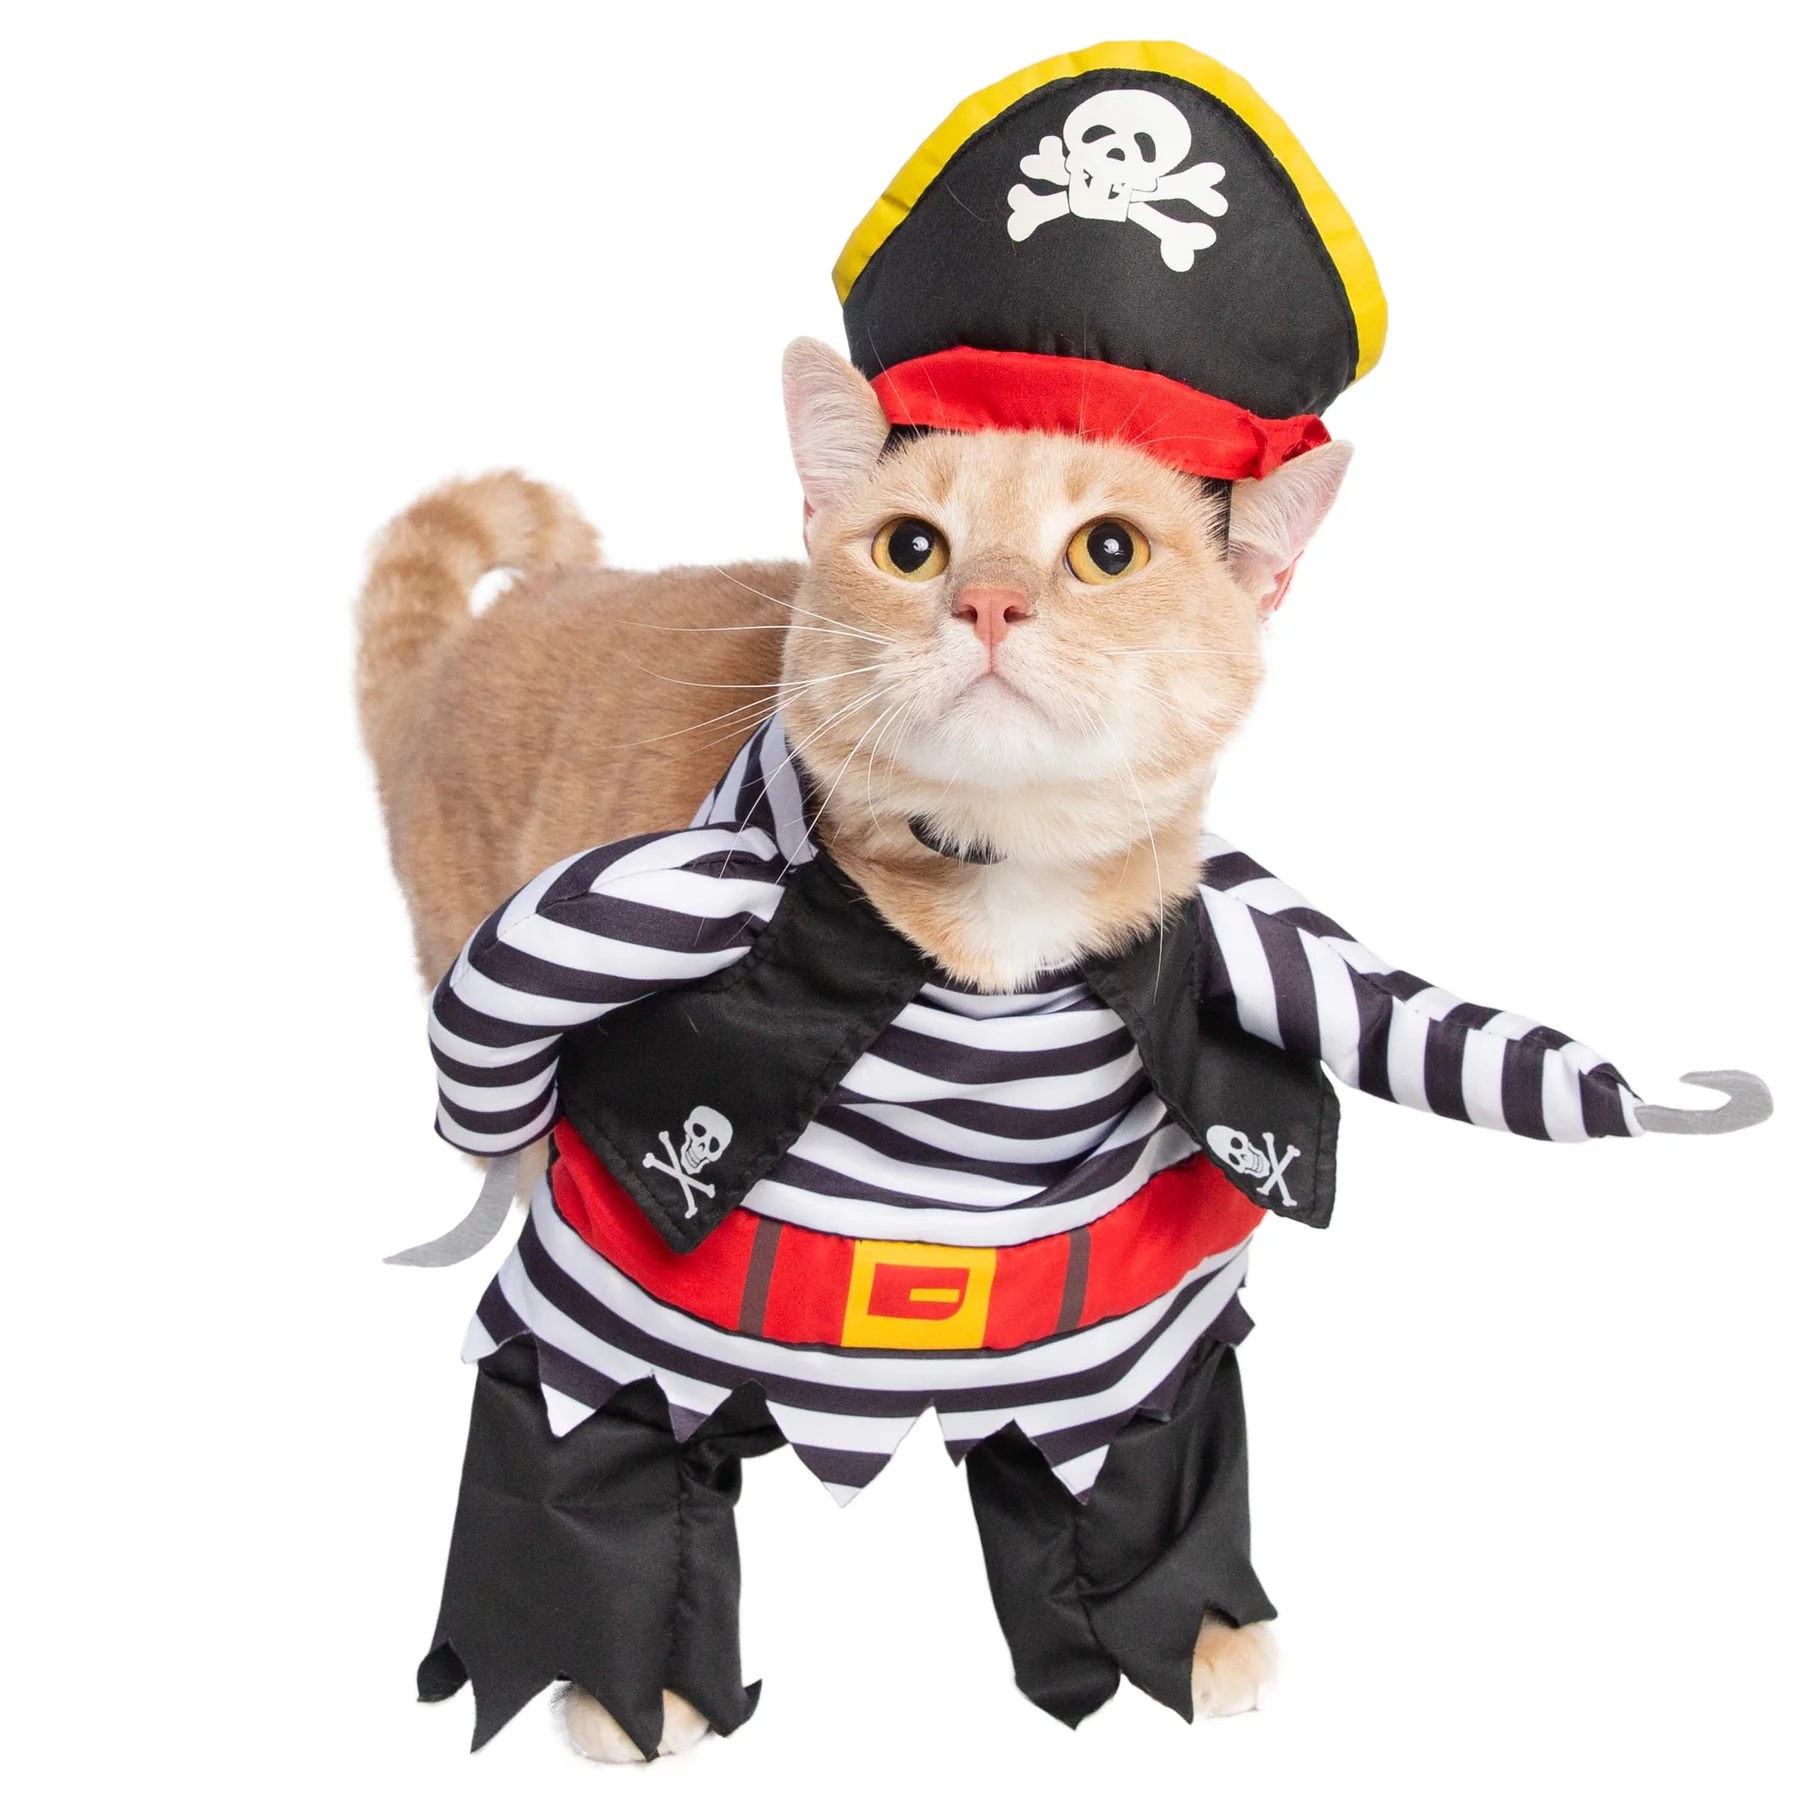 Pirate Cat Costume Black-Owned